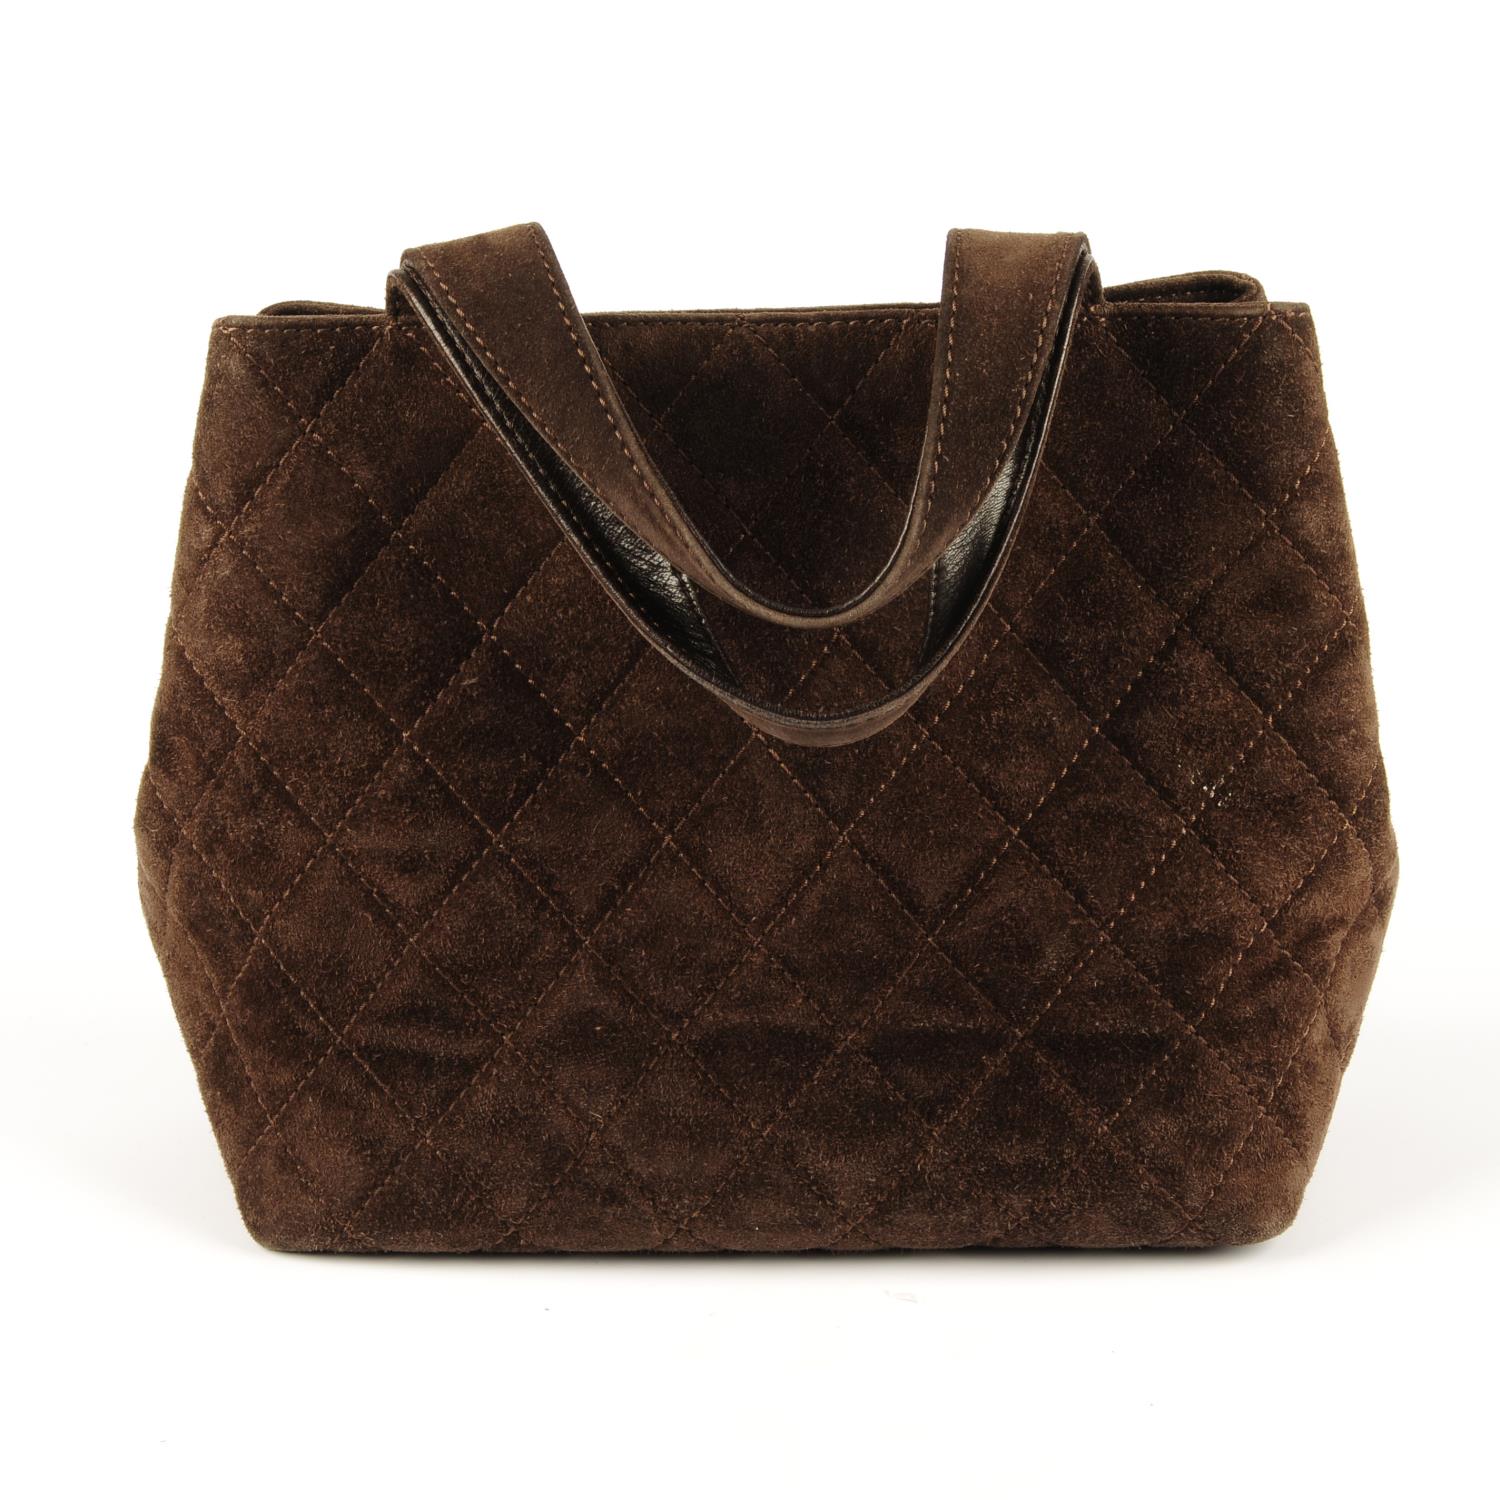 CHANEL - a brown suede Matelassé handbag. - Image 2 of 4